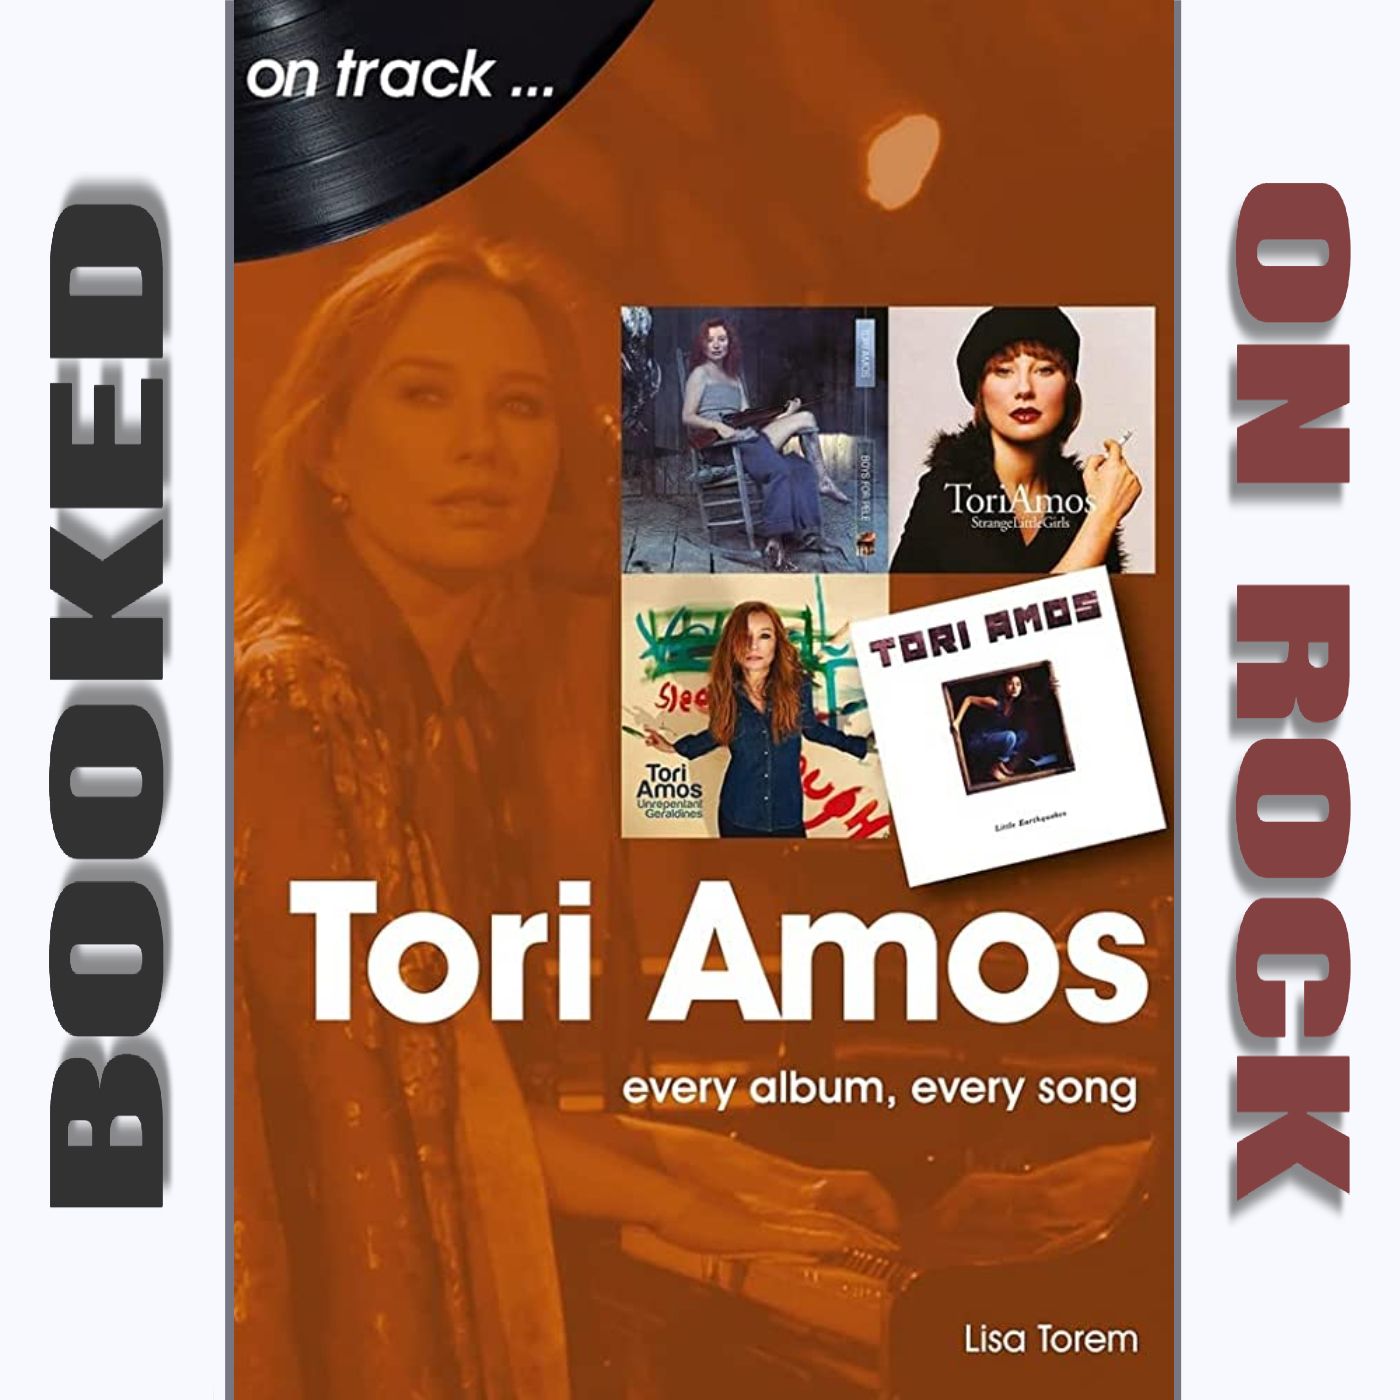 ”Tori Amos: Every Album, Every Song”/Lisa Torem [Episode 115]